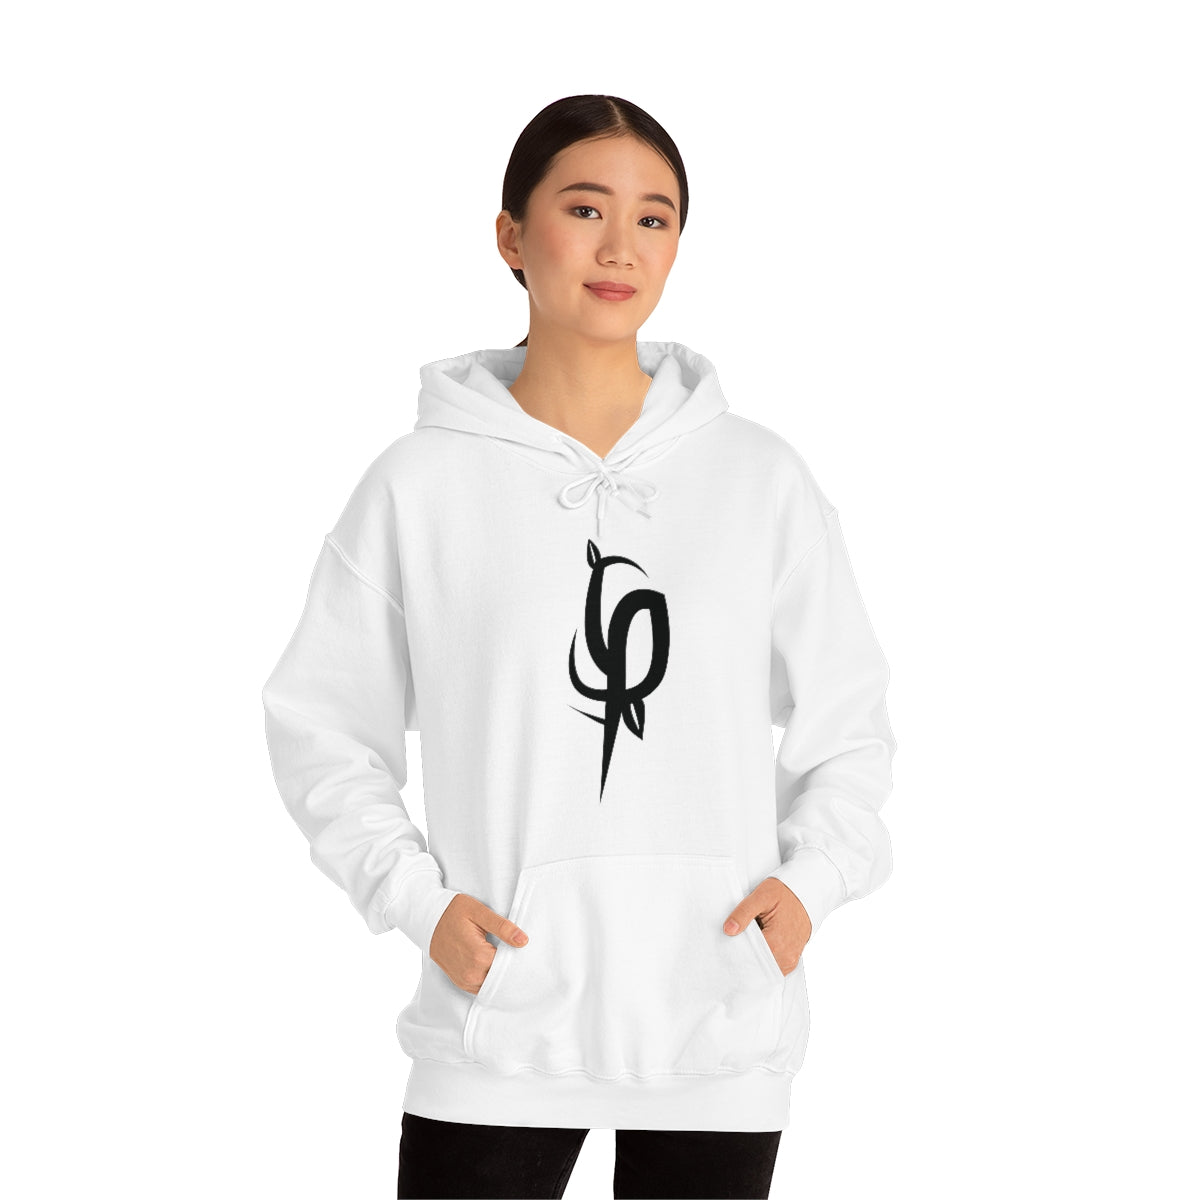 Promo Flourish$Prosper Logomark Hooded Sweatshirt